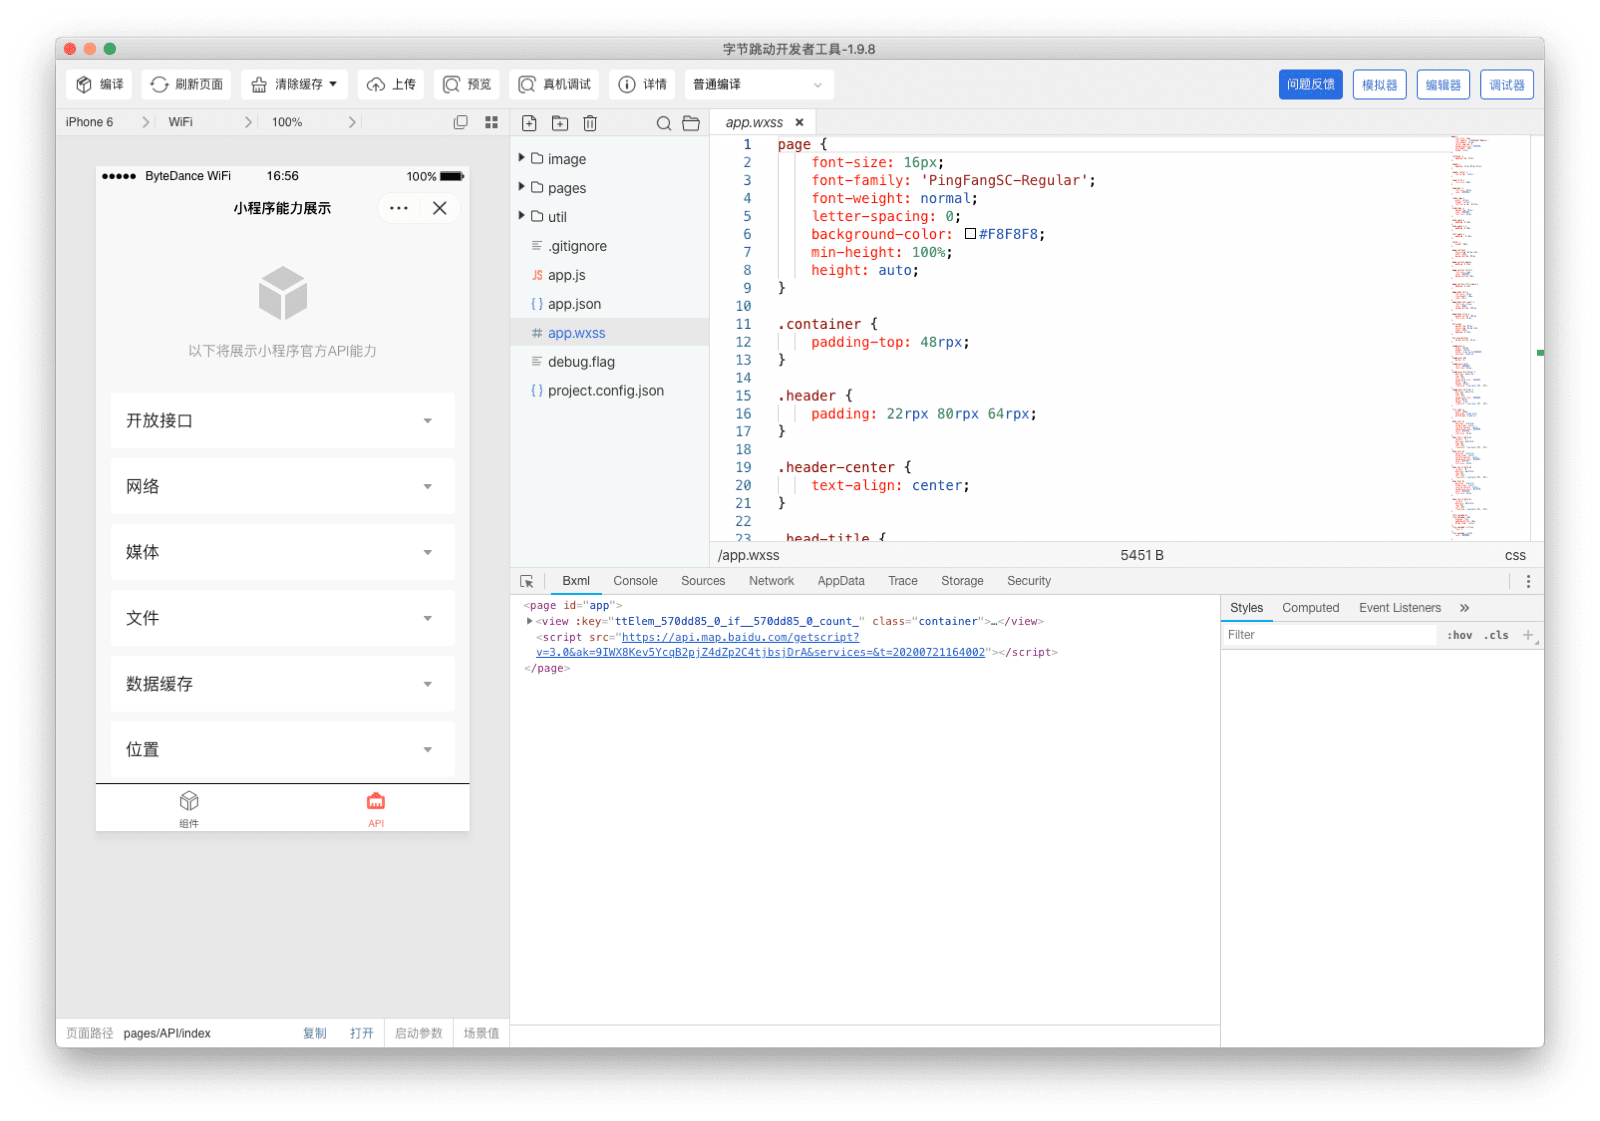 ByteDance DevTools application window showing simulator, code editor, and debugger.